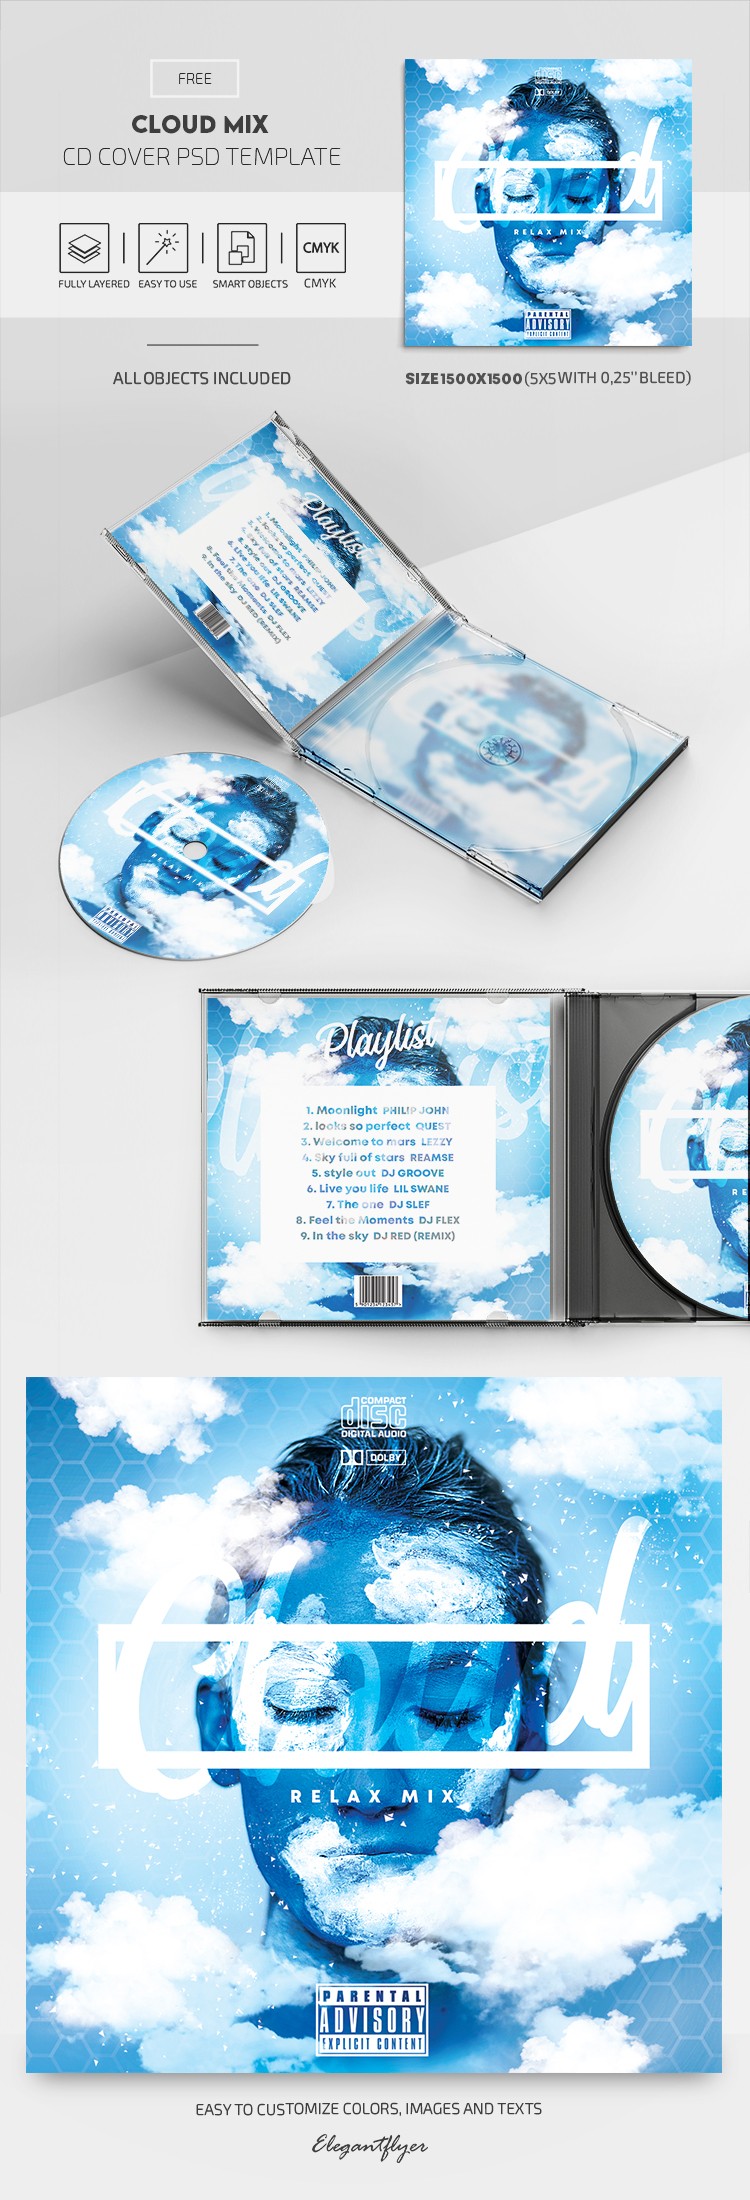 Cloud Mix CD Cover by ElegantFlyer